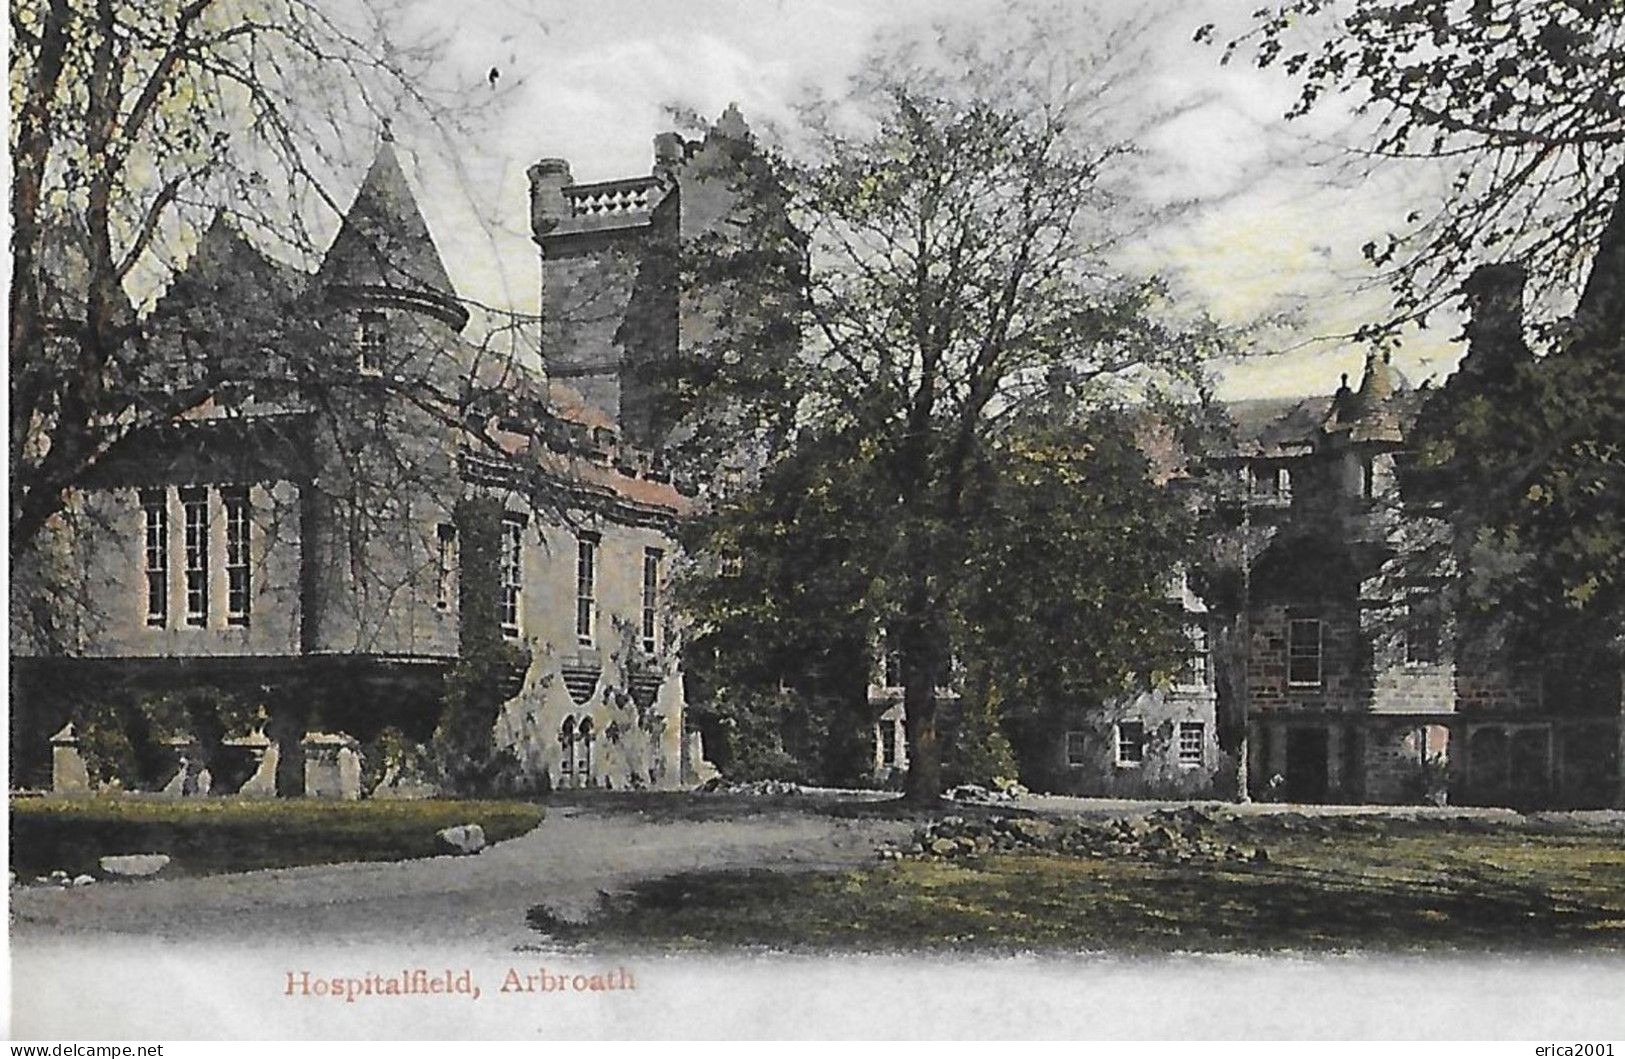 Angus. Hospitalfield, Harbroath. - Angus